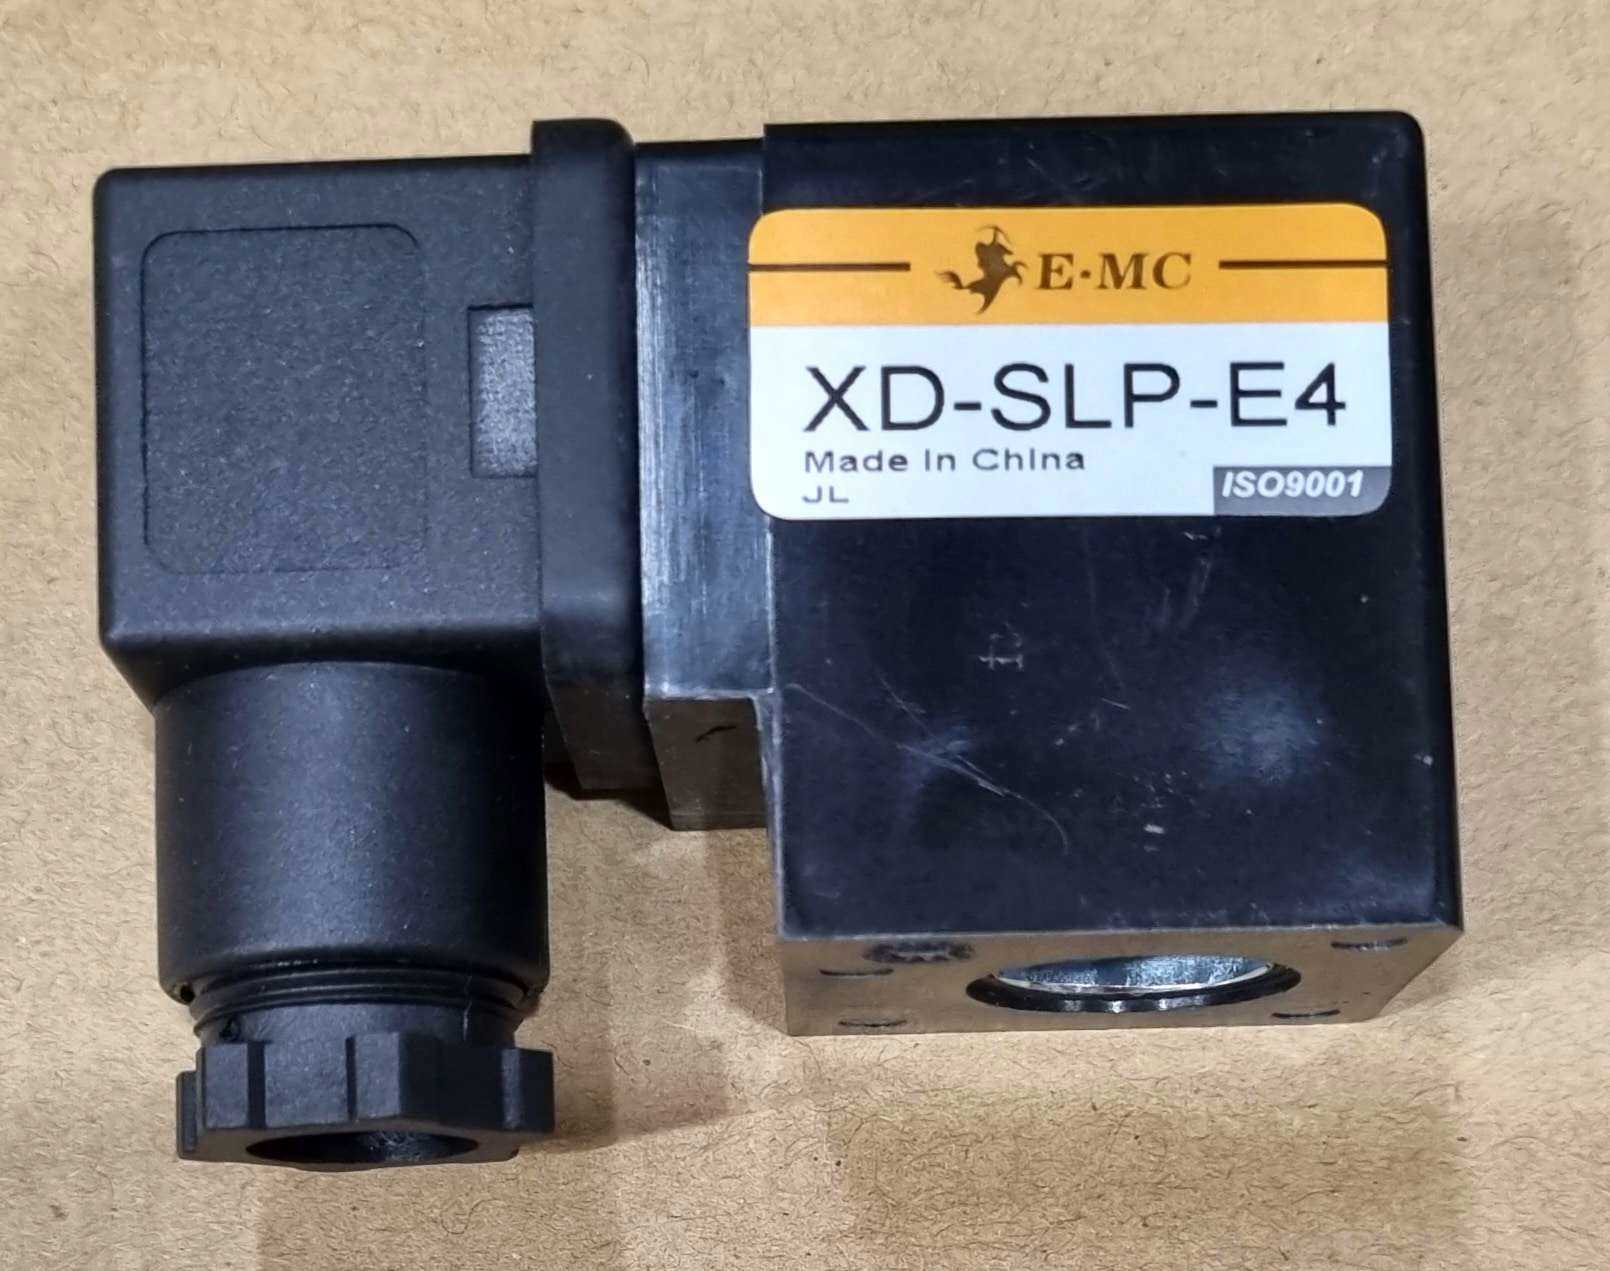 marca: EMC <br/>modelo: XD-SLP-E4 